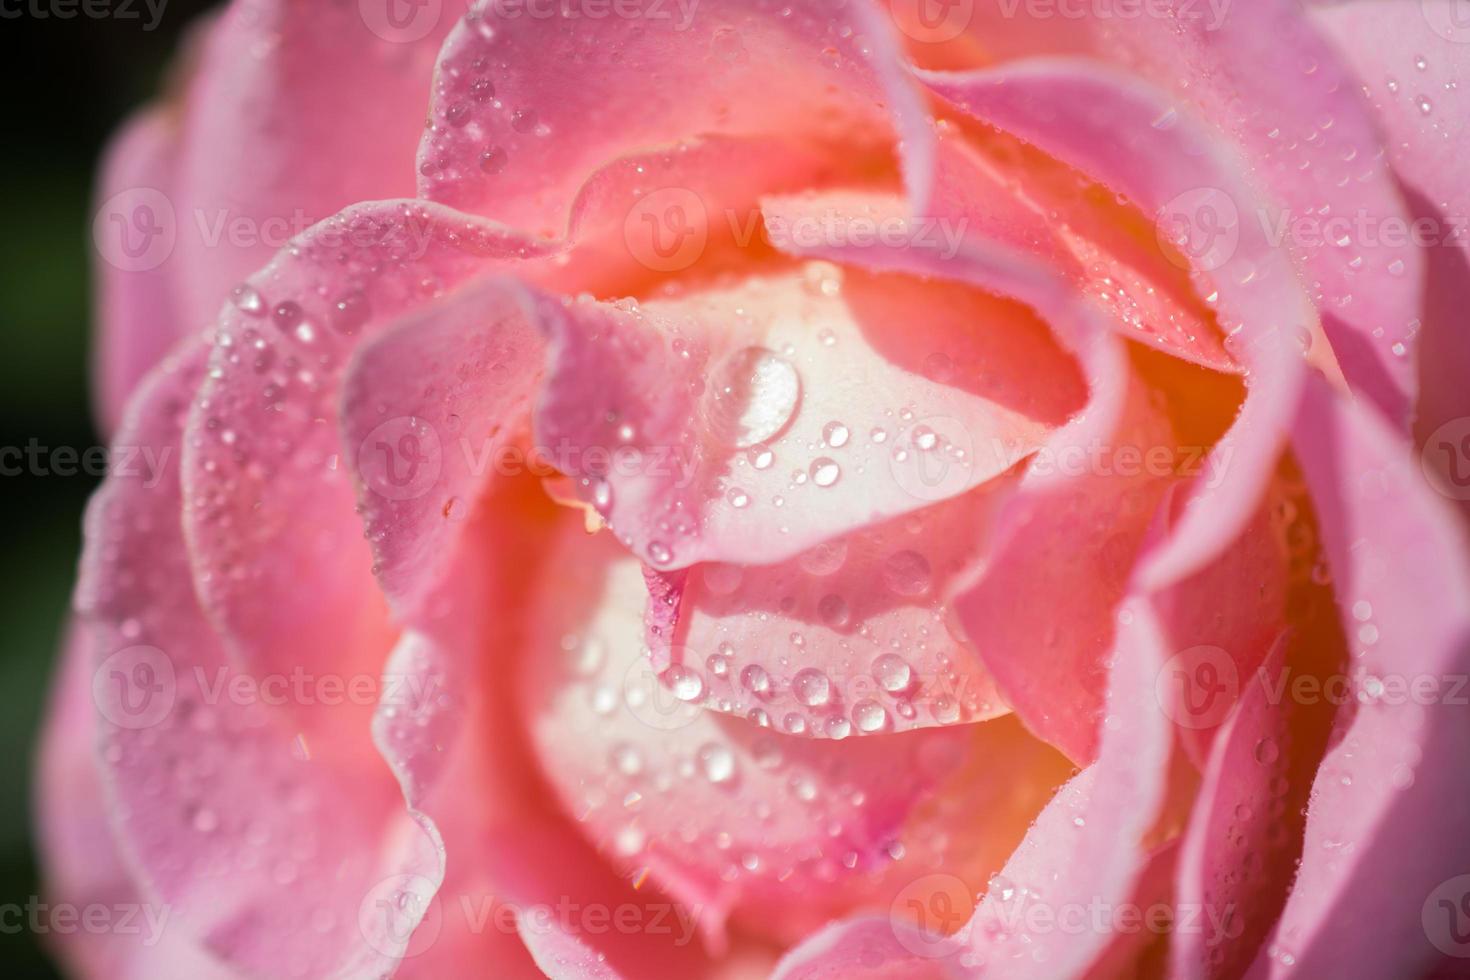 rosa con gotas de agua foto